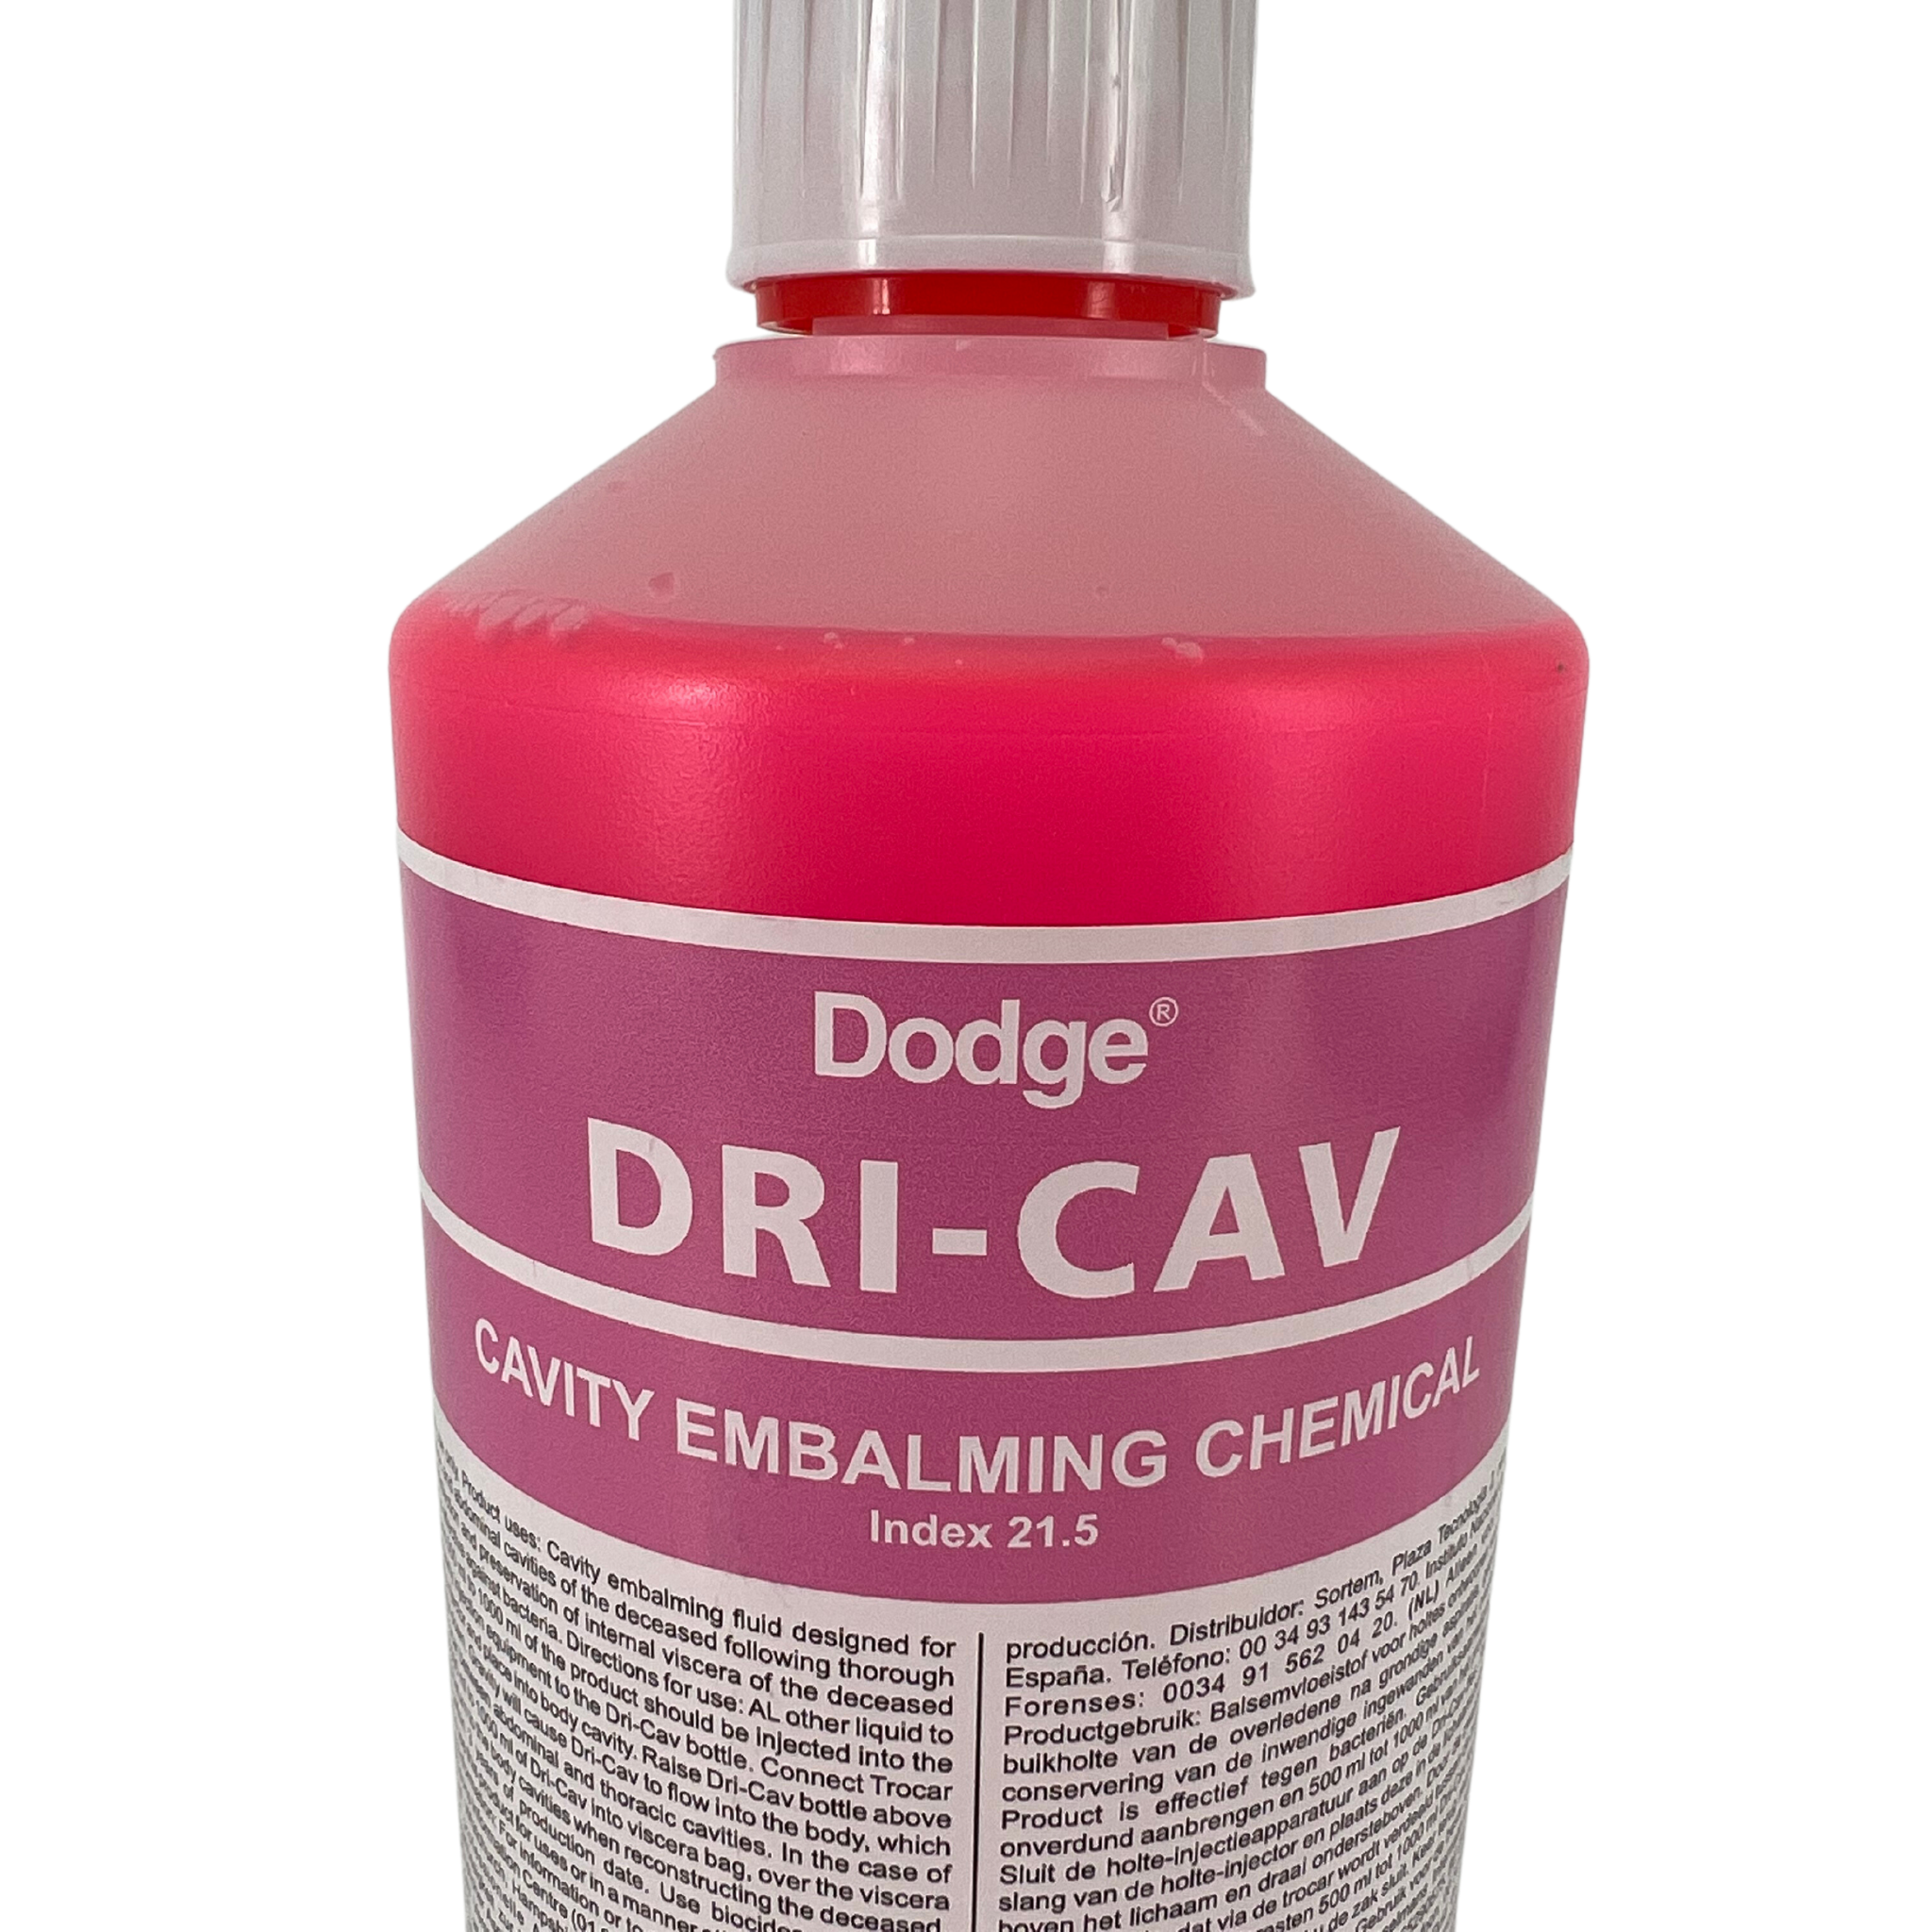 Dodge Dri-Cav